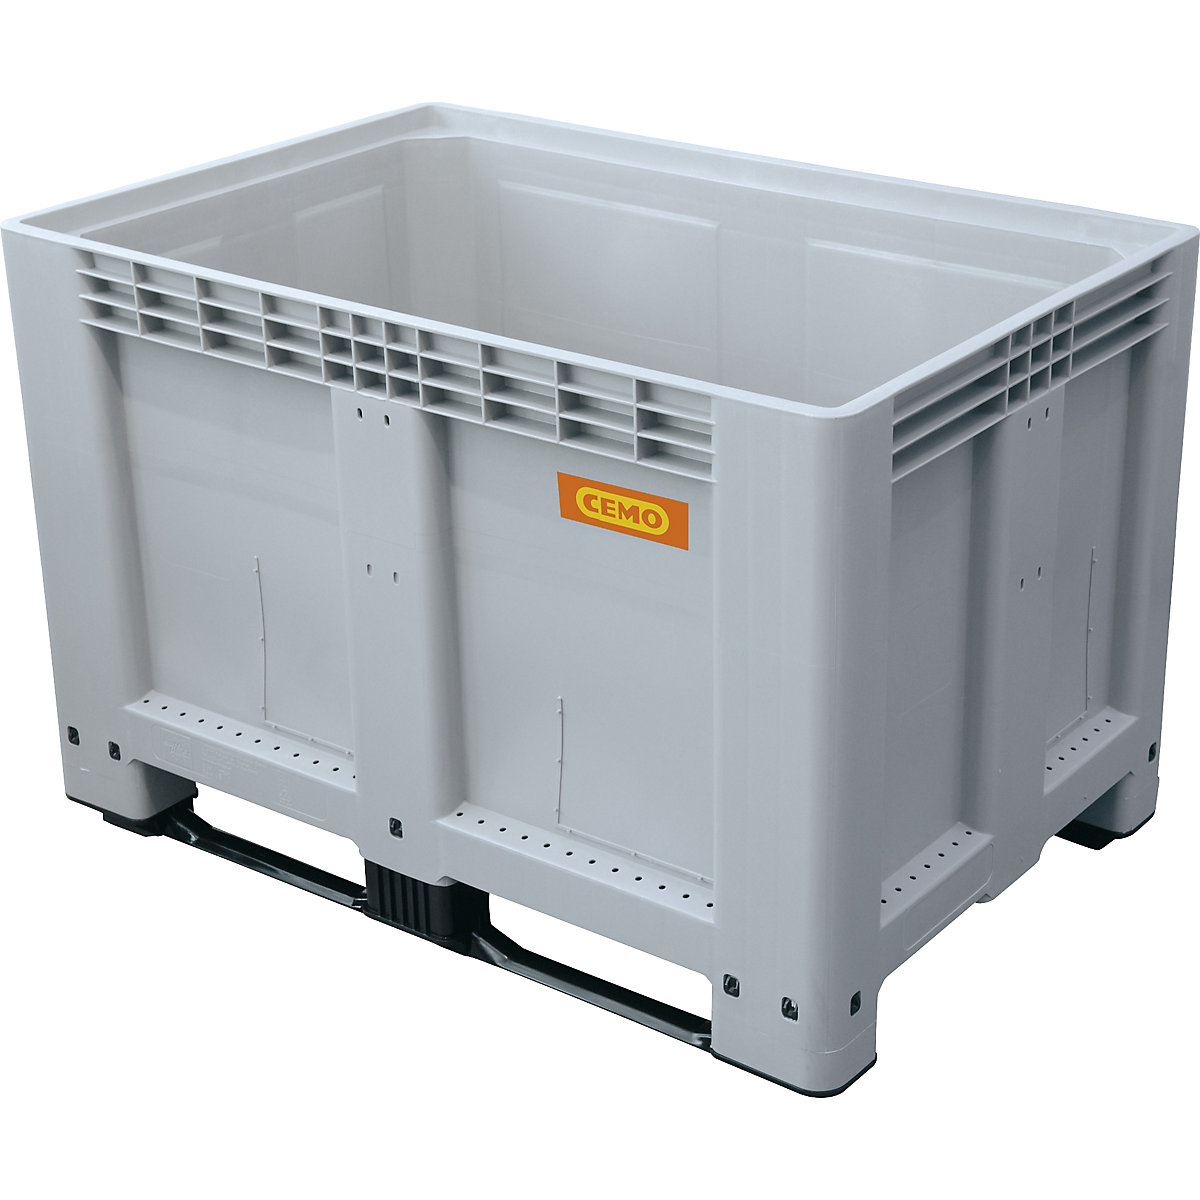 Altbatterie-Lager- und Transportbox CEMO